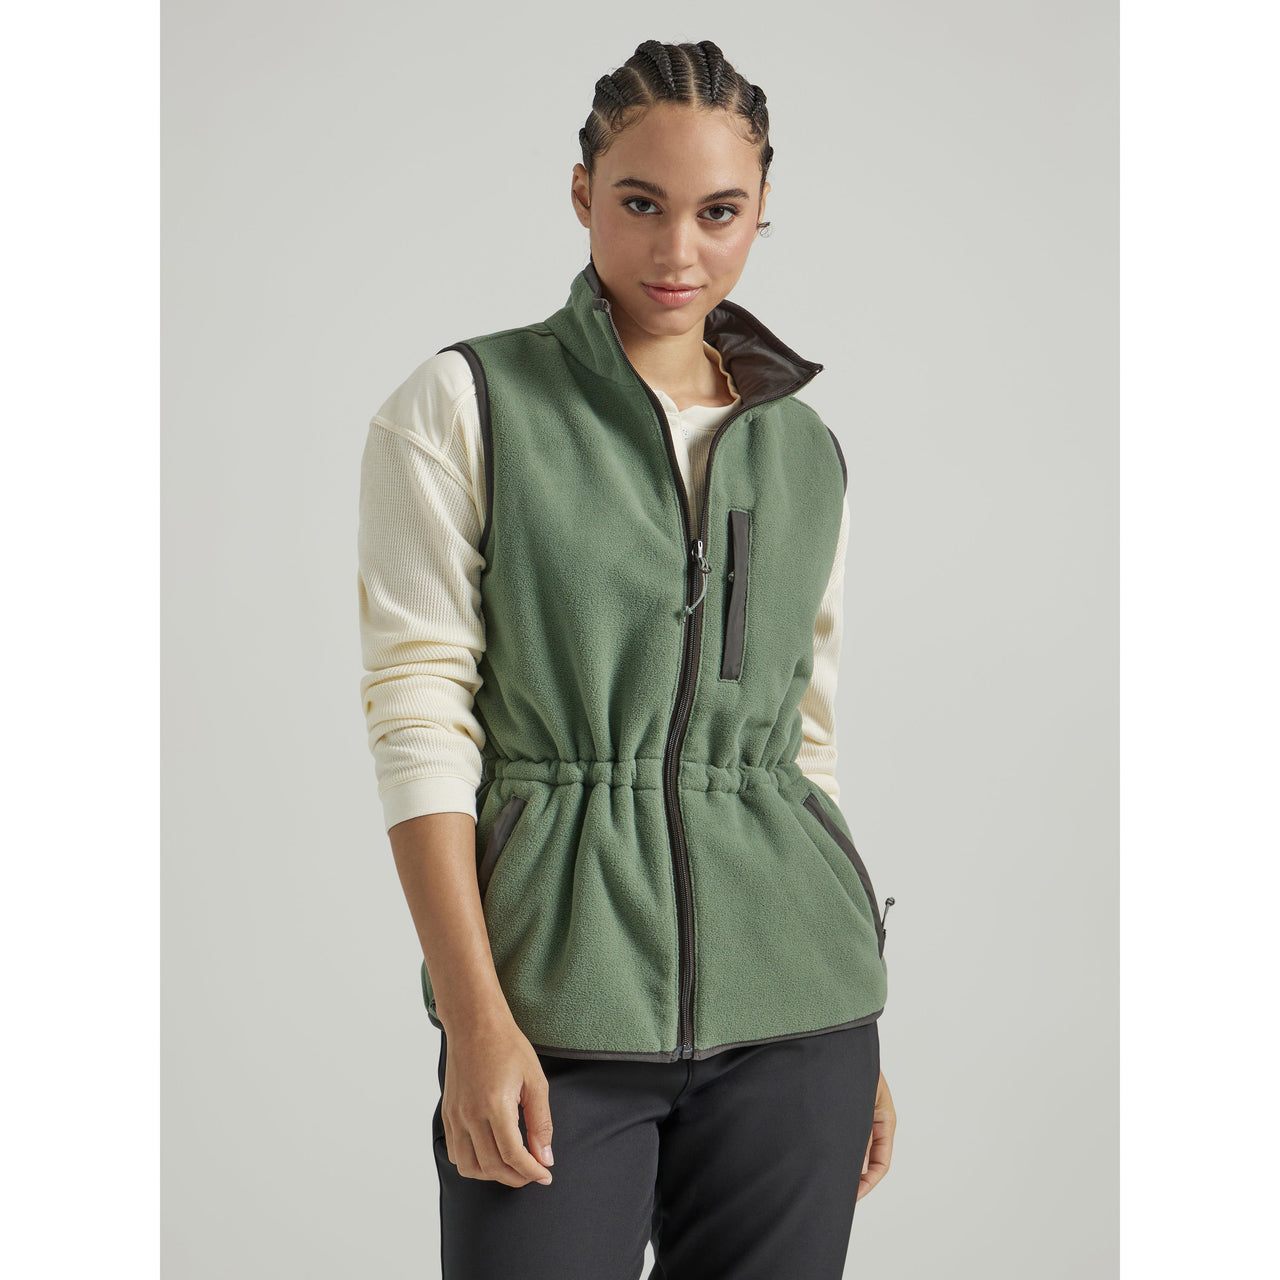 Wrangler Women's ATG Reversible Fleece Vest - Green/Grey